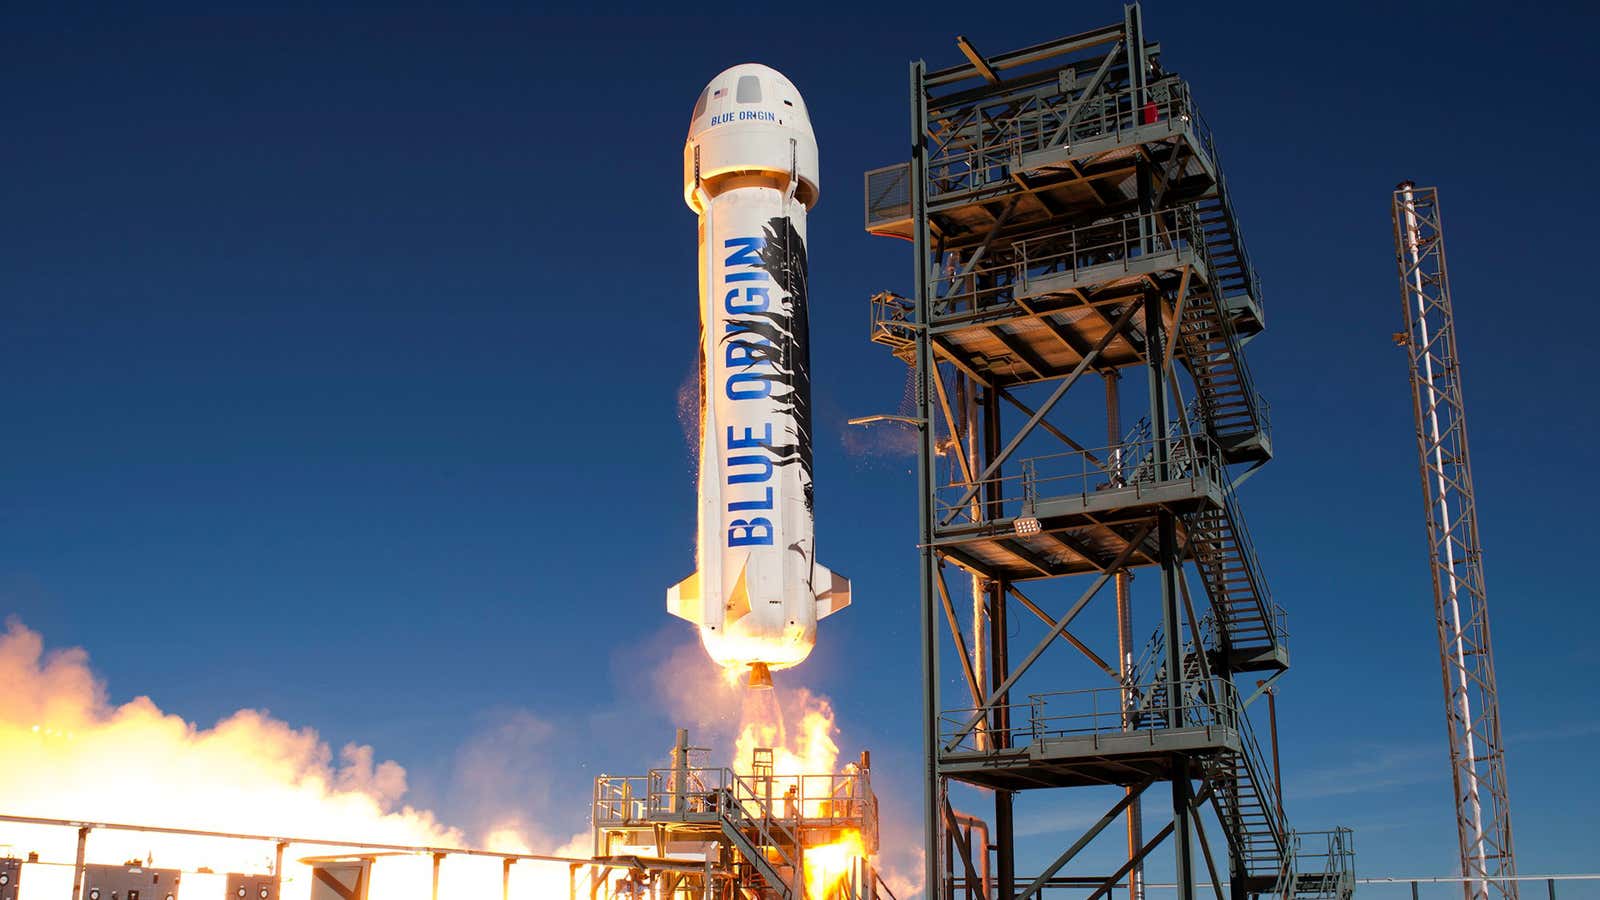 Blue Origin’s New Shepard spacecraft launches in 2016.